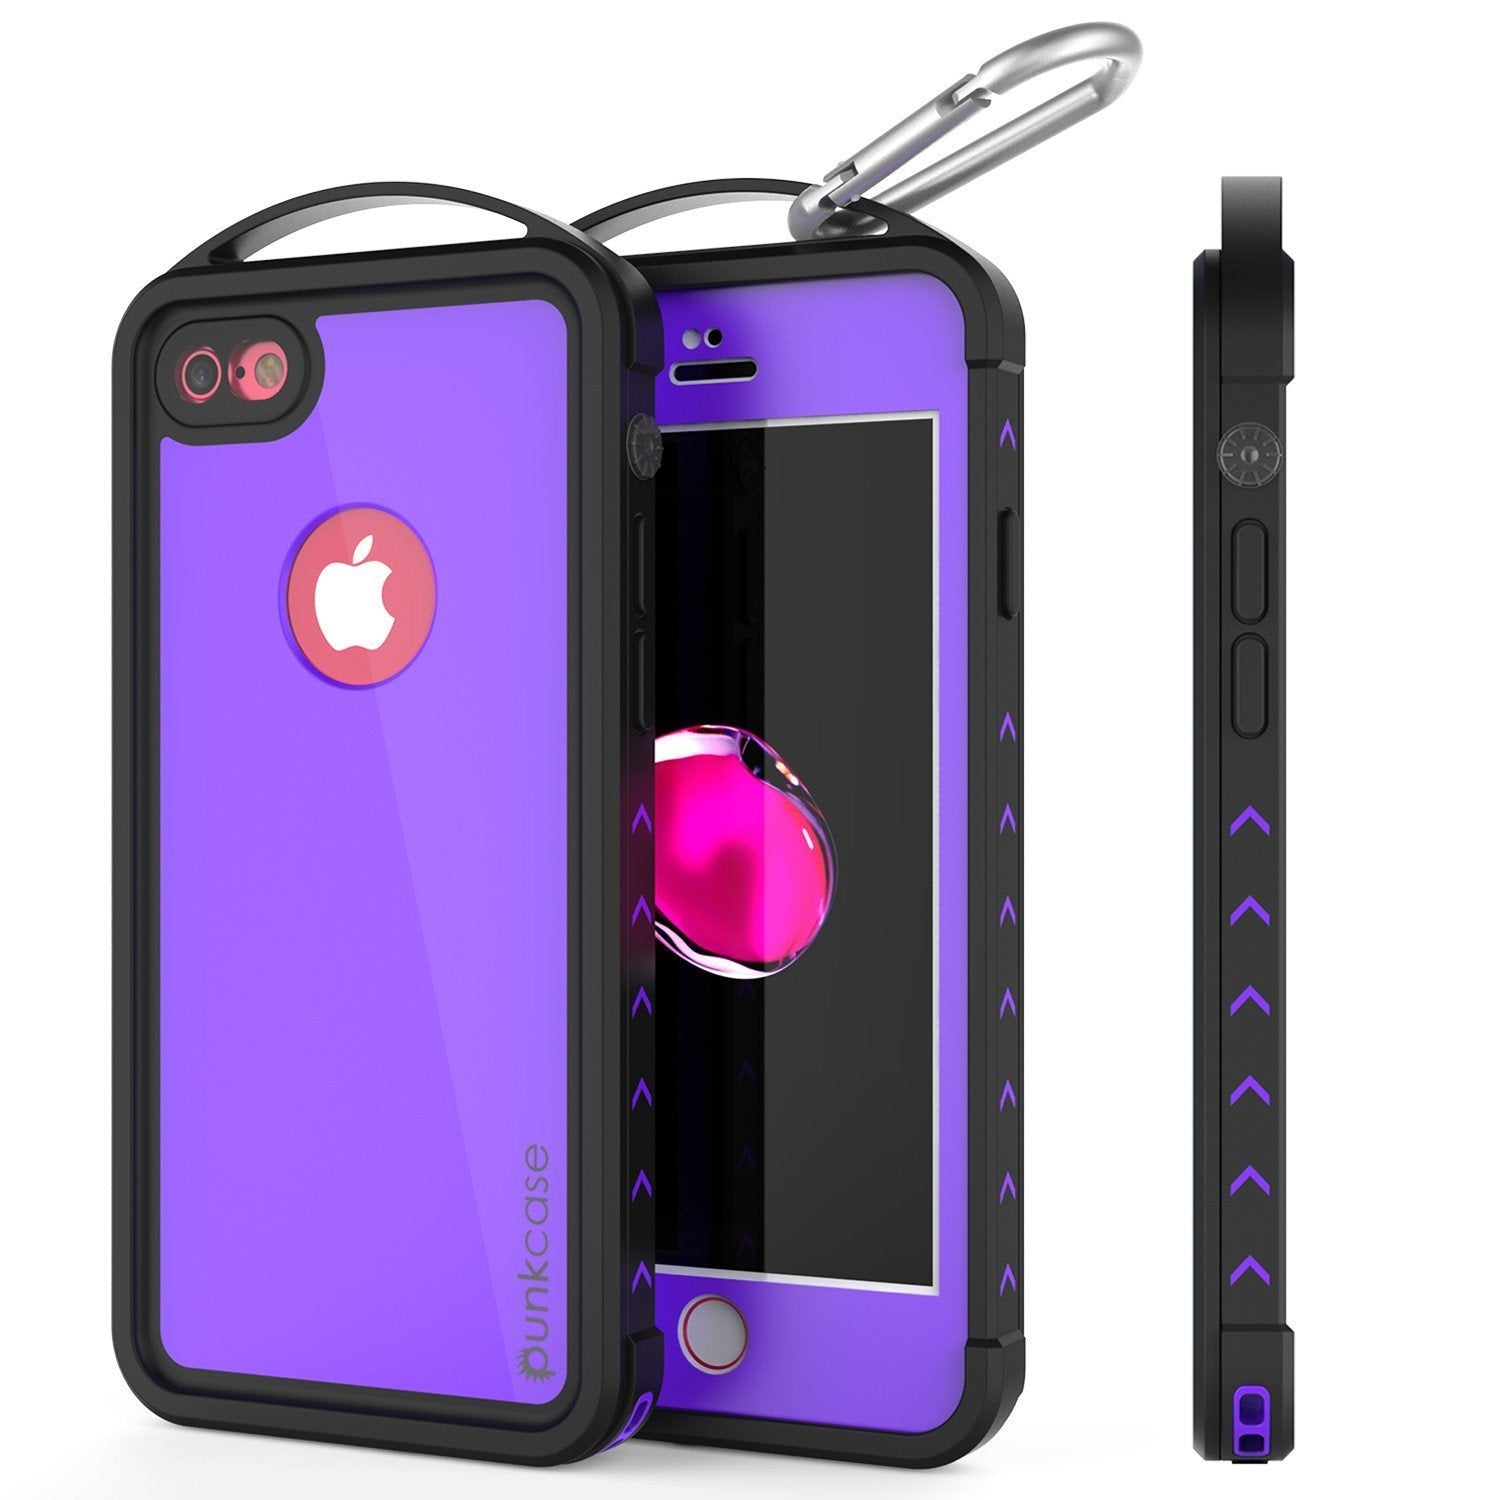 iPhone SE (4.7") Waterproof Case, Punkcase ALPINE Series, Purple | Heavy Duty Armor Cover (Color in image: purple)